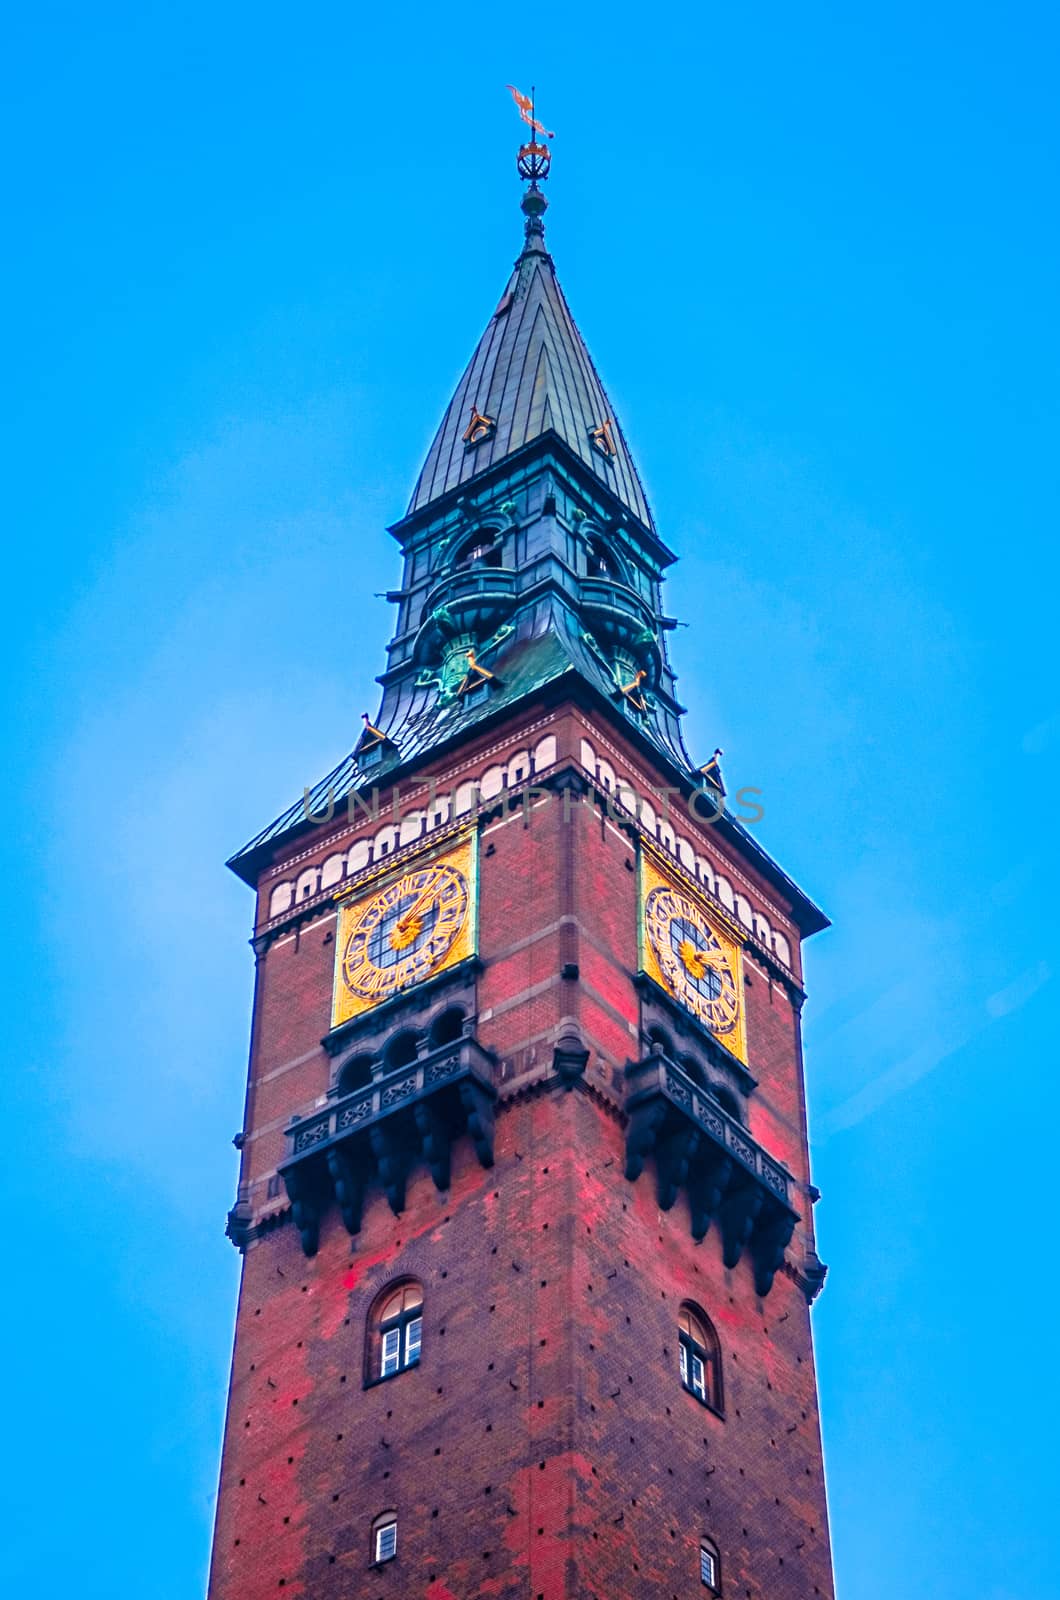 City Hall Tower with clock. Copenhagen, Denmark